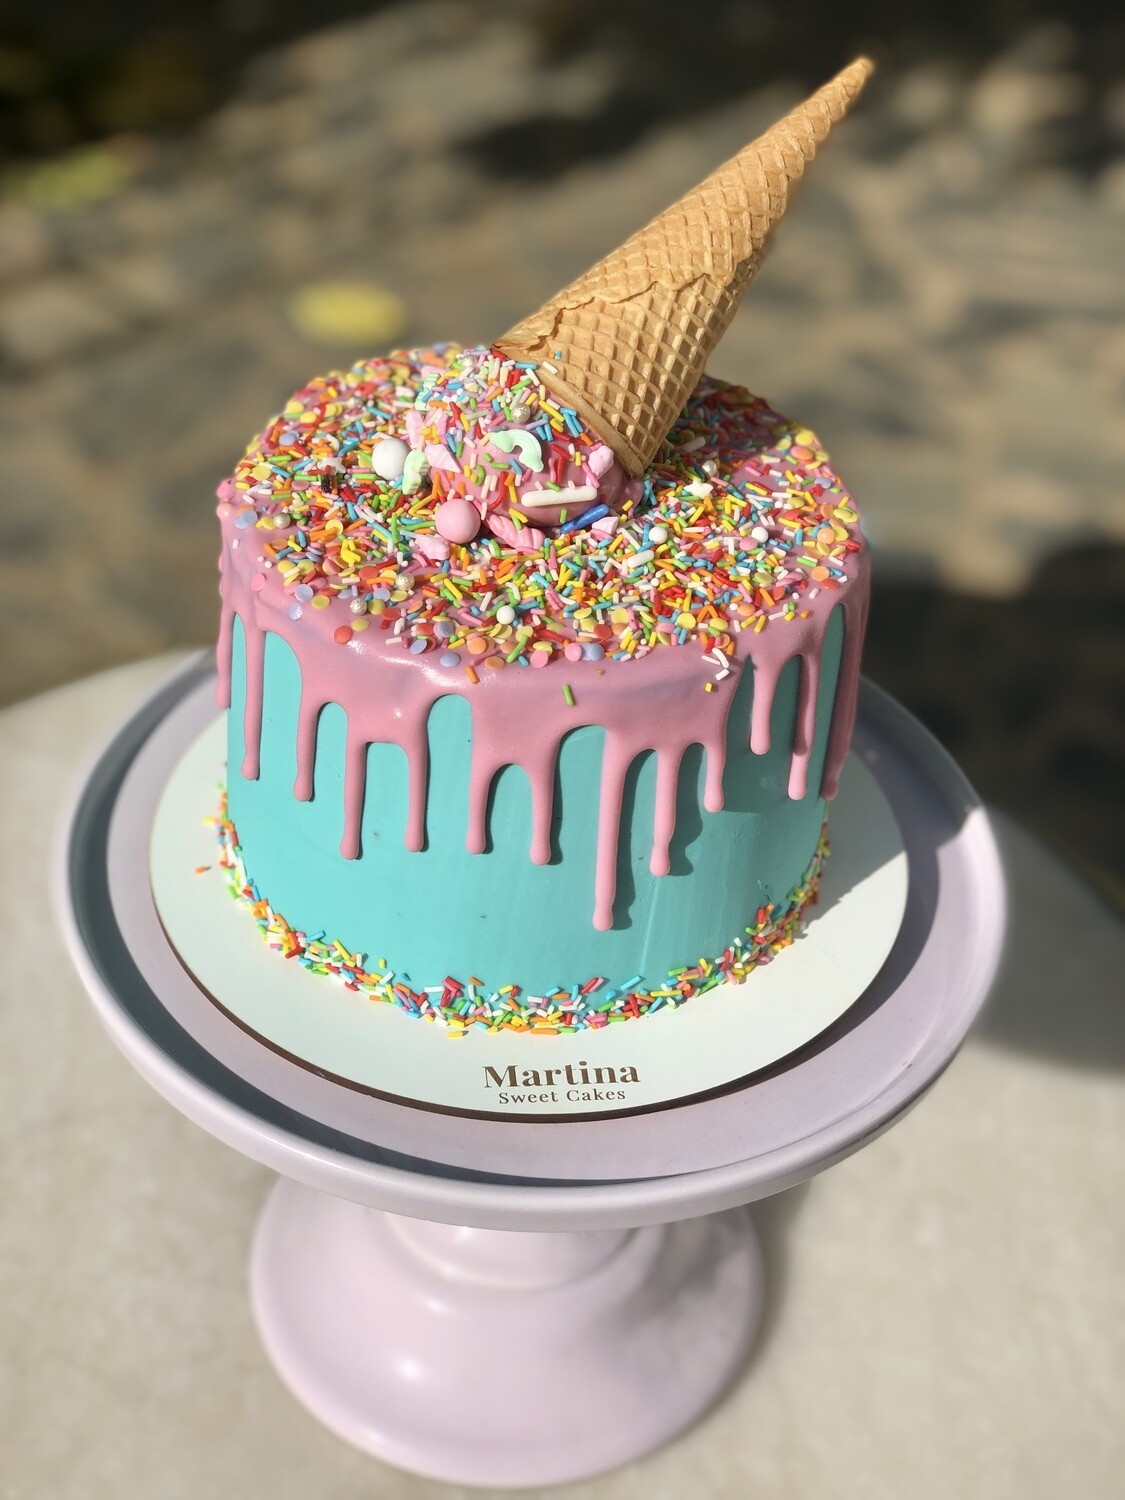 Dripping ice cream cone cake